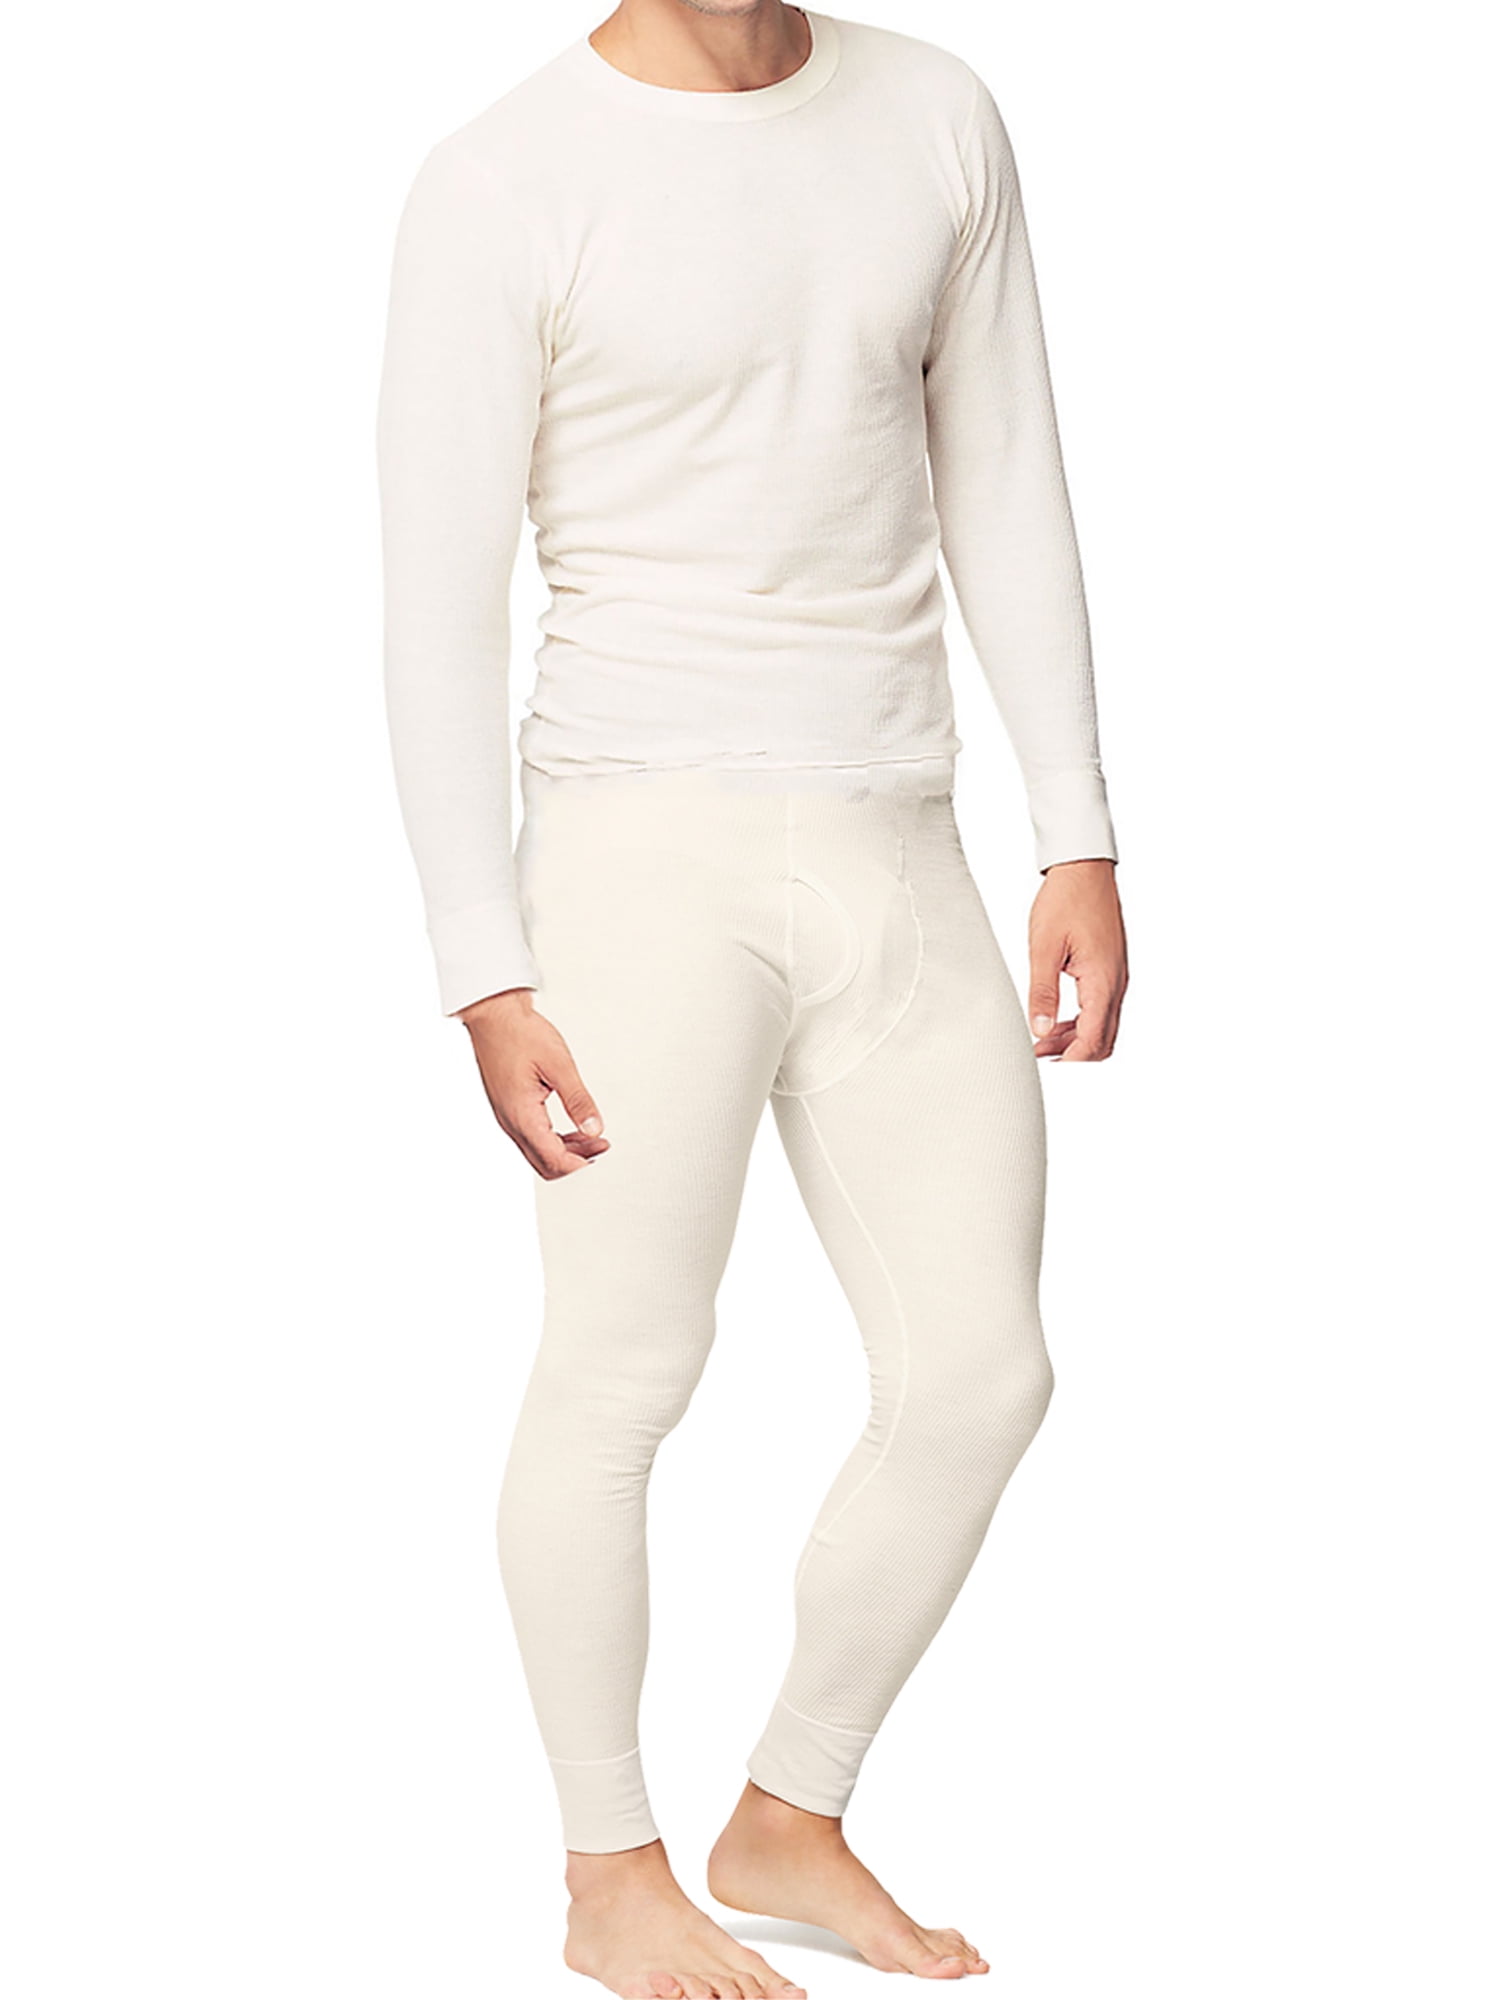 Men's White Winter Thermal Long Johns Pants Trousers Leggings Long Sleeved Top 